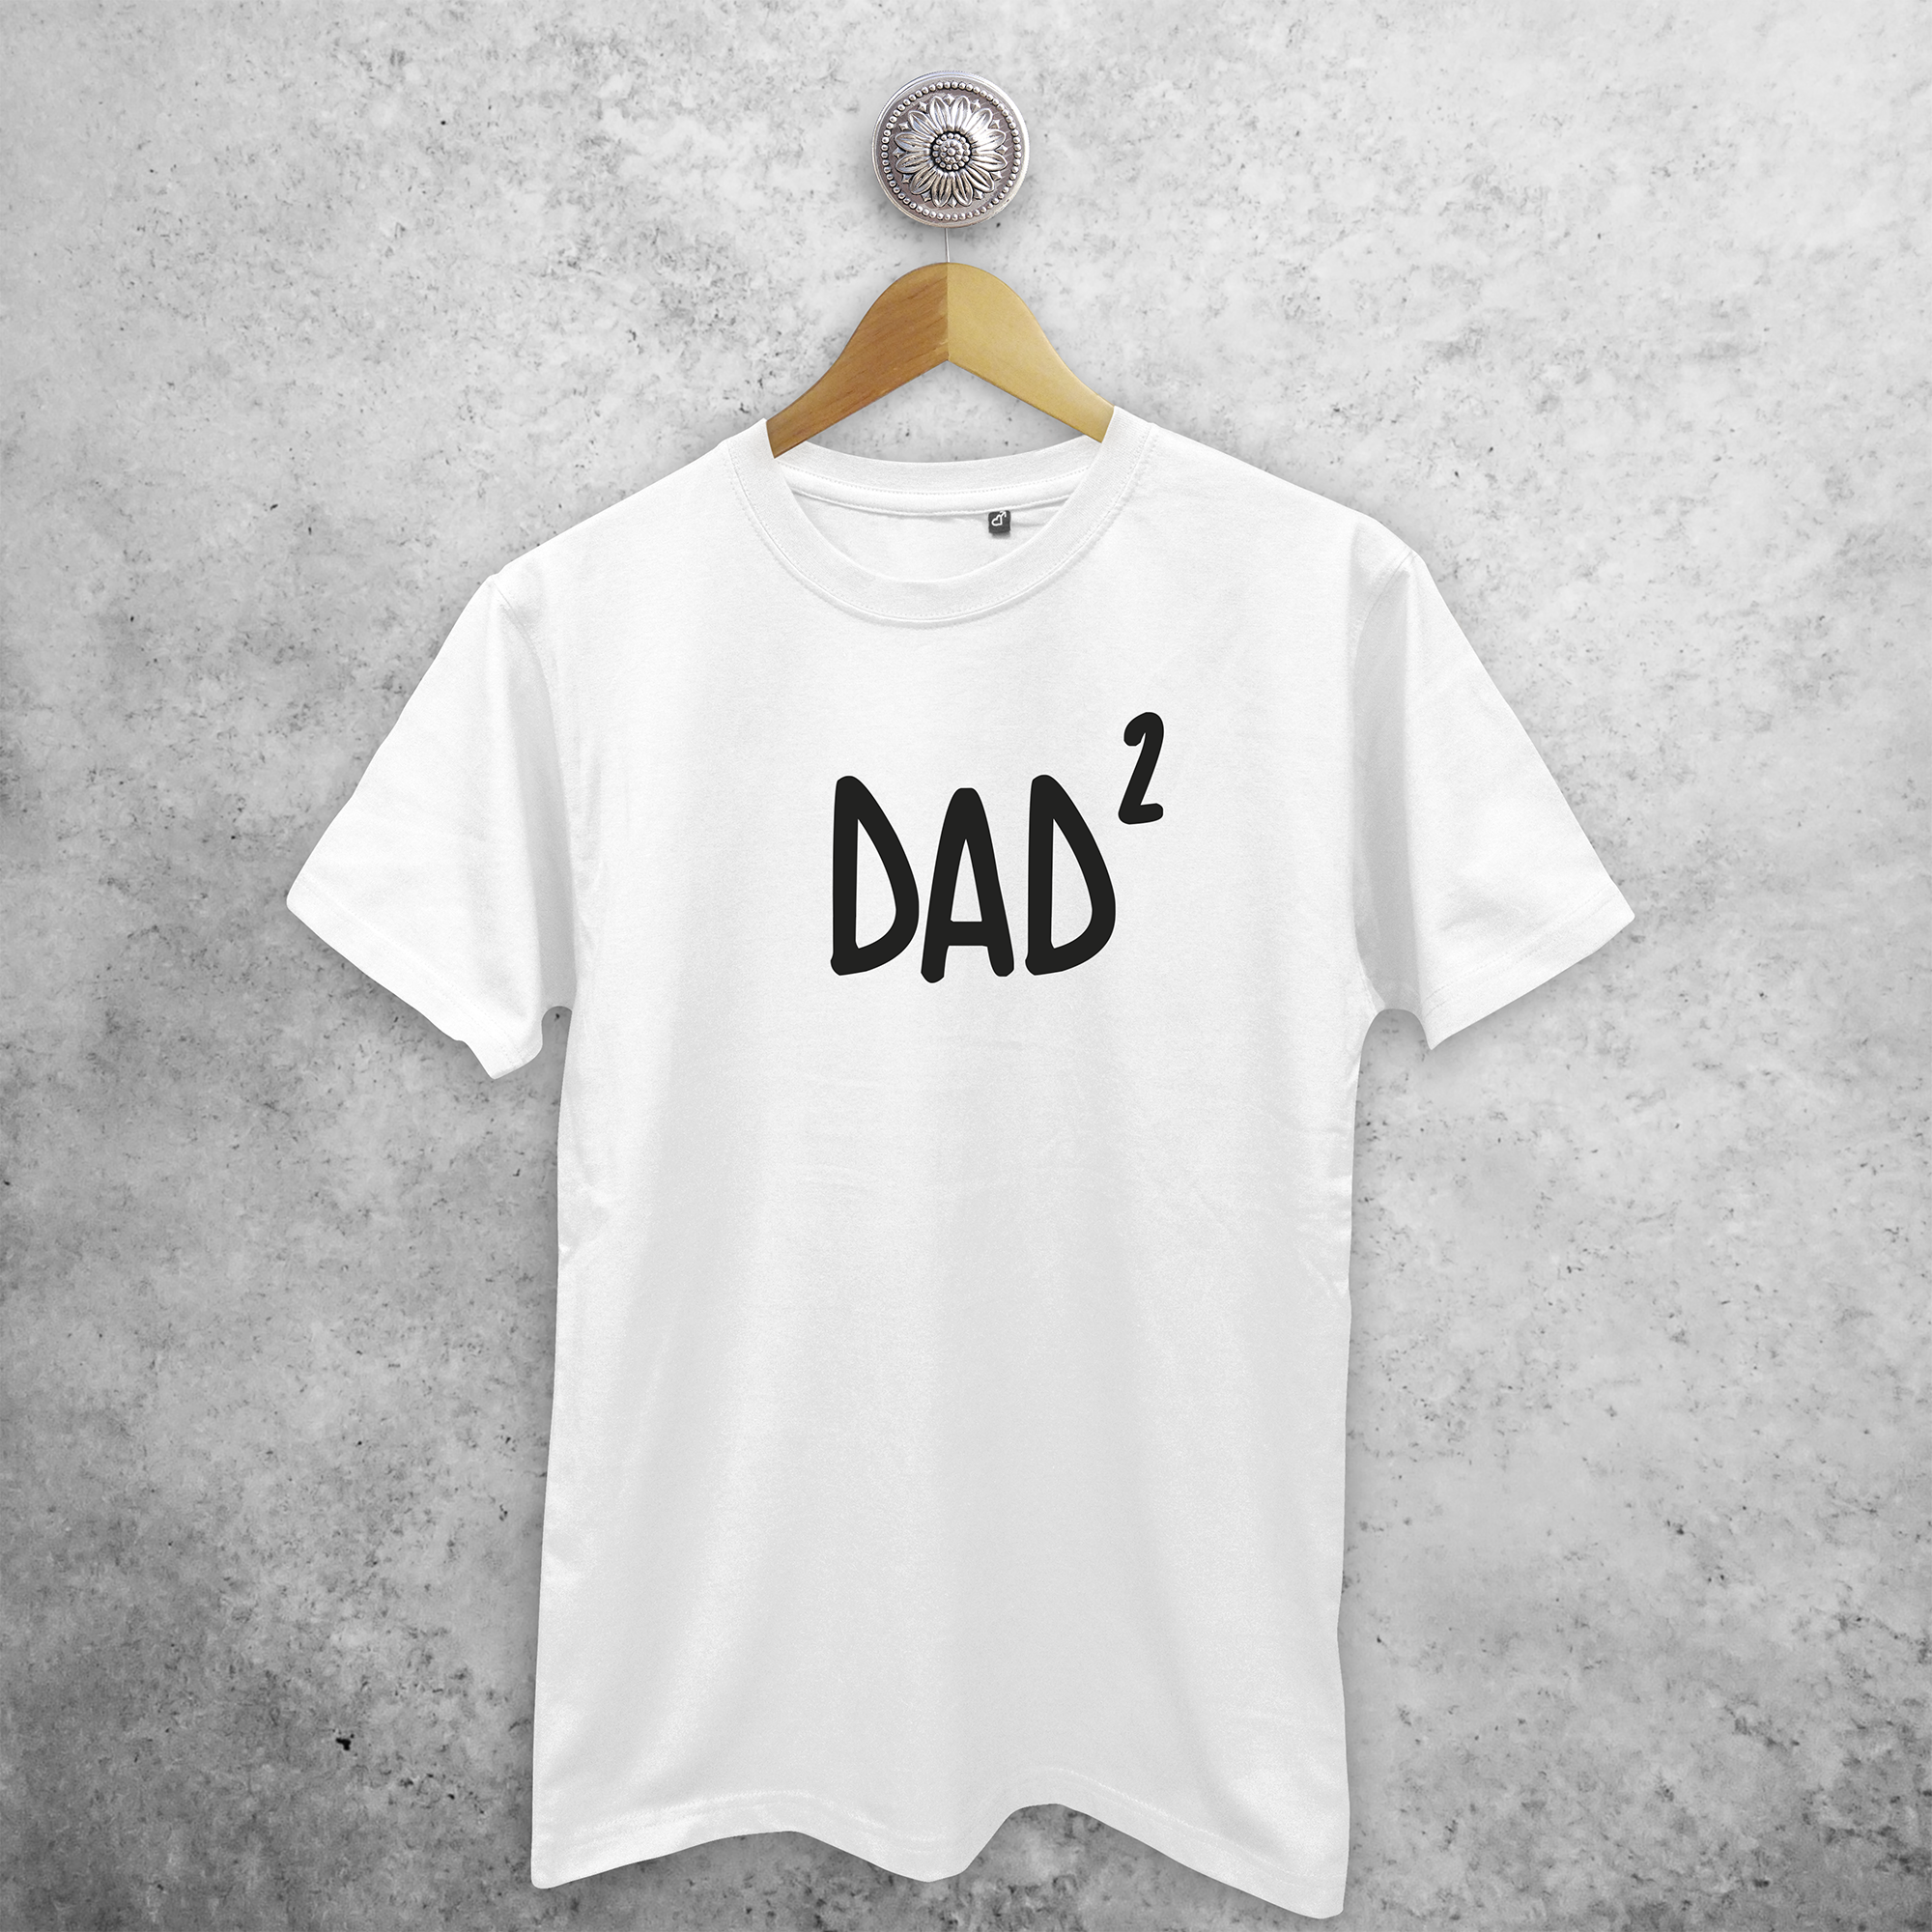 'Dad' adult shirt